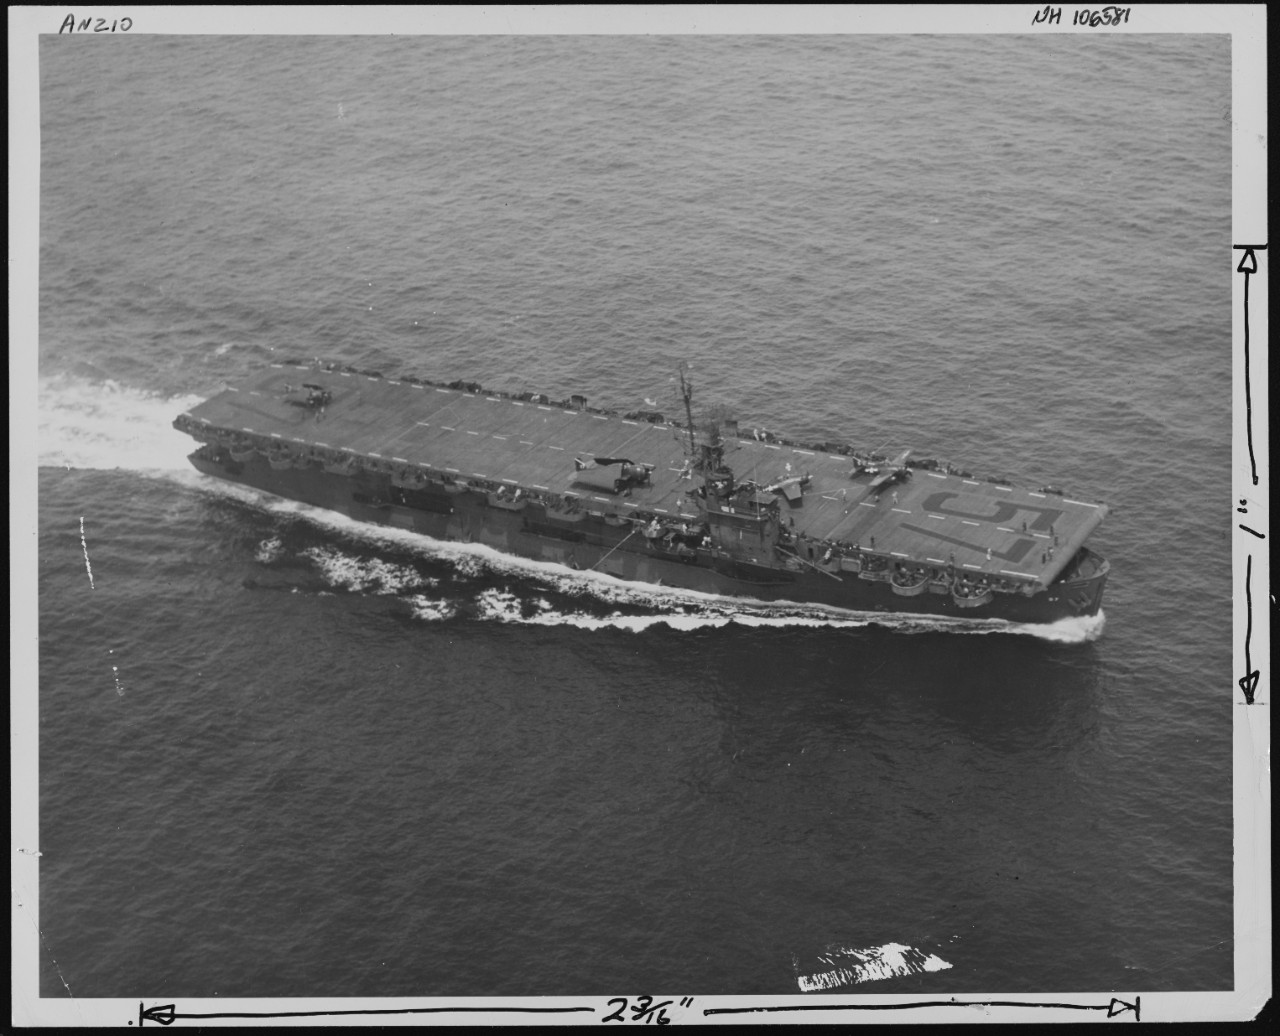 Photo # NH 106581  USS Anzio